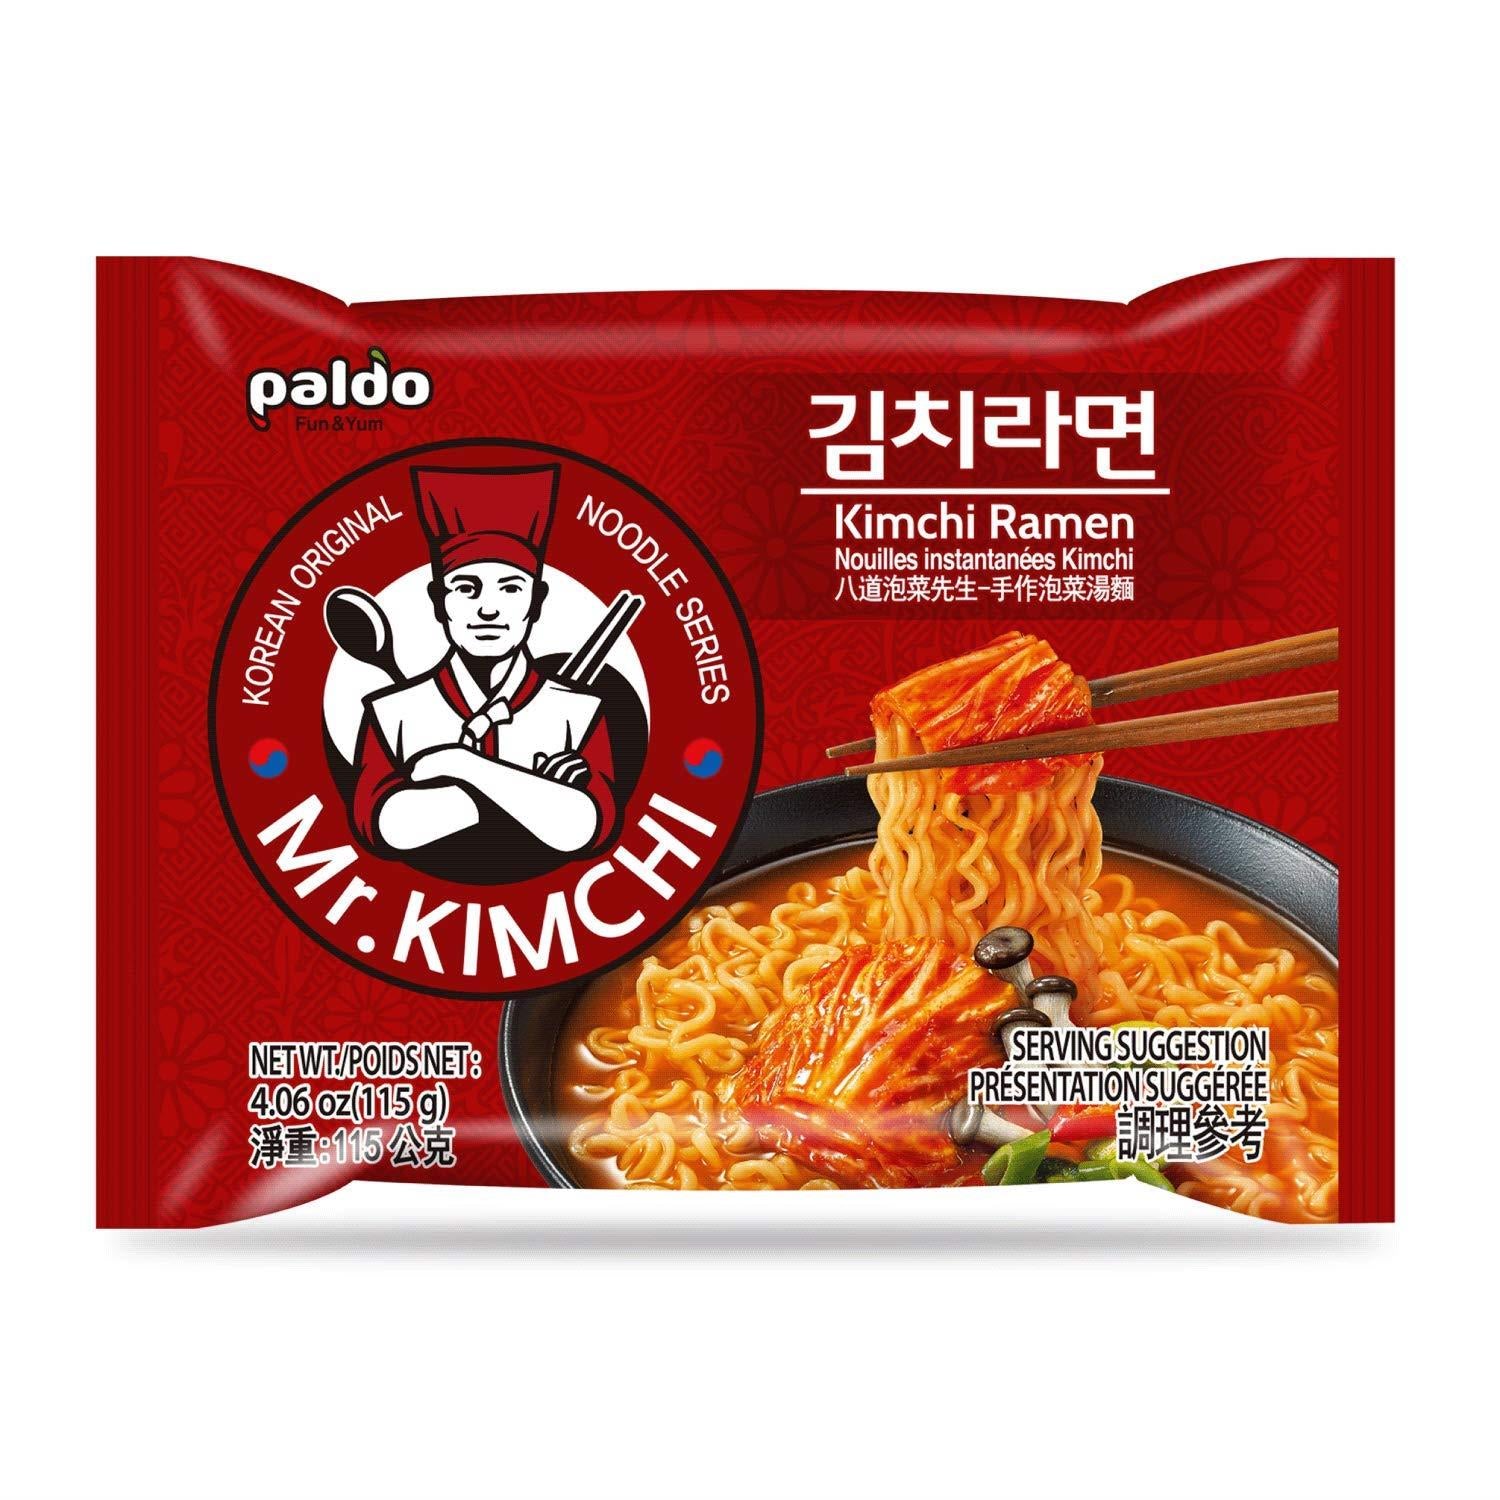 Paldo Fun & Yum Kimchi Ramen Instant Noodles with Soup, Kimchi Based Spicy Broth, Best Oriental Style, Original Korean Ramyun, Spicy Ramen Challenge, K-Food, 김치라면 115g x 4 Pack